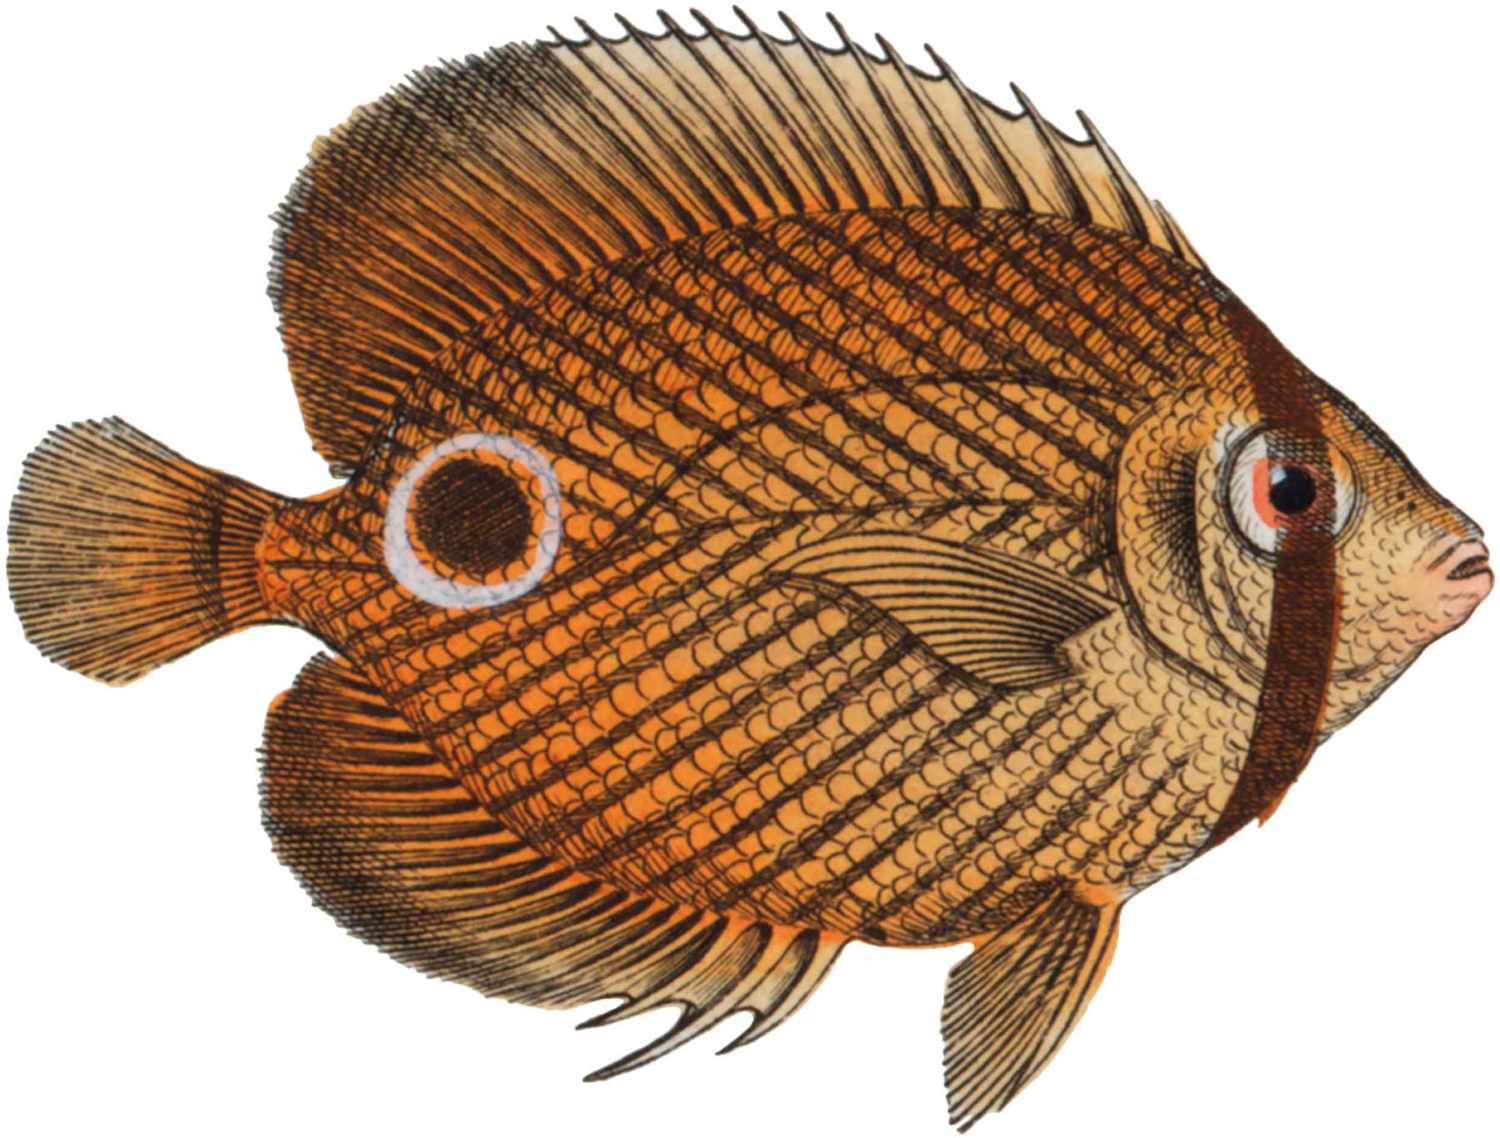 An orange wide bodied fish